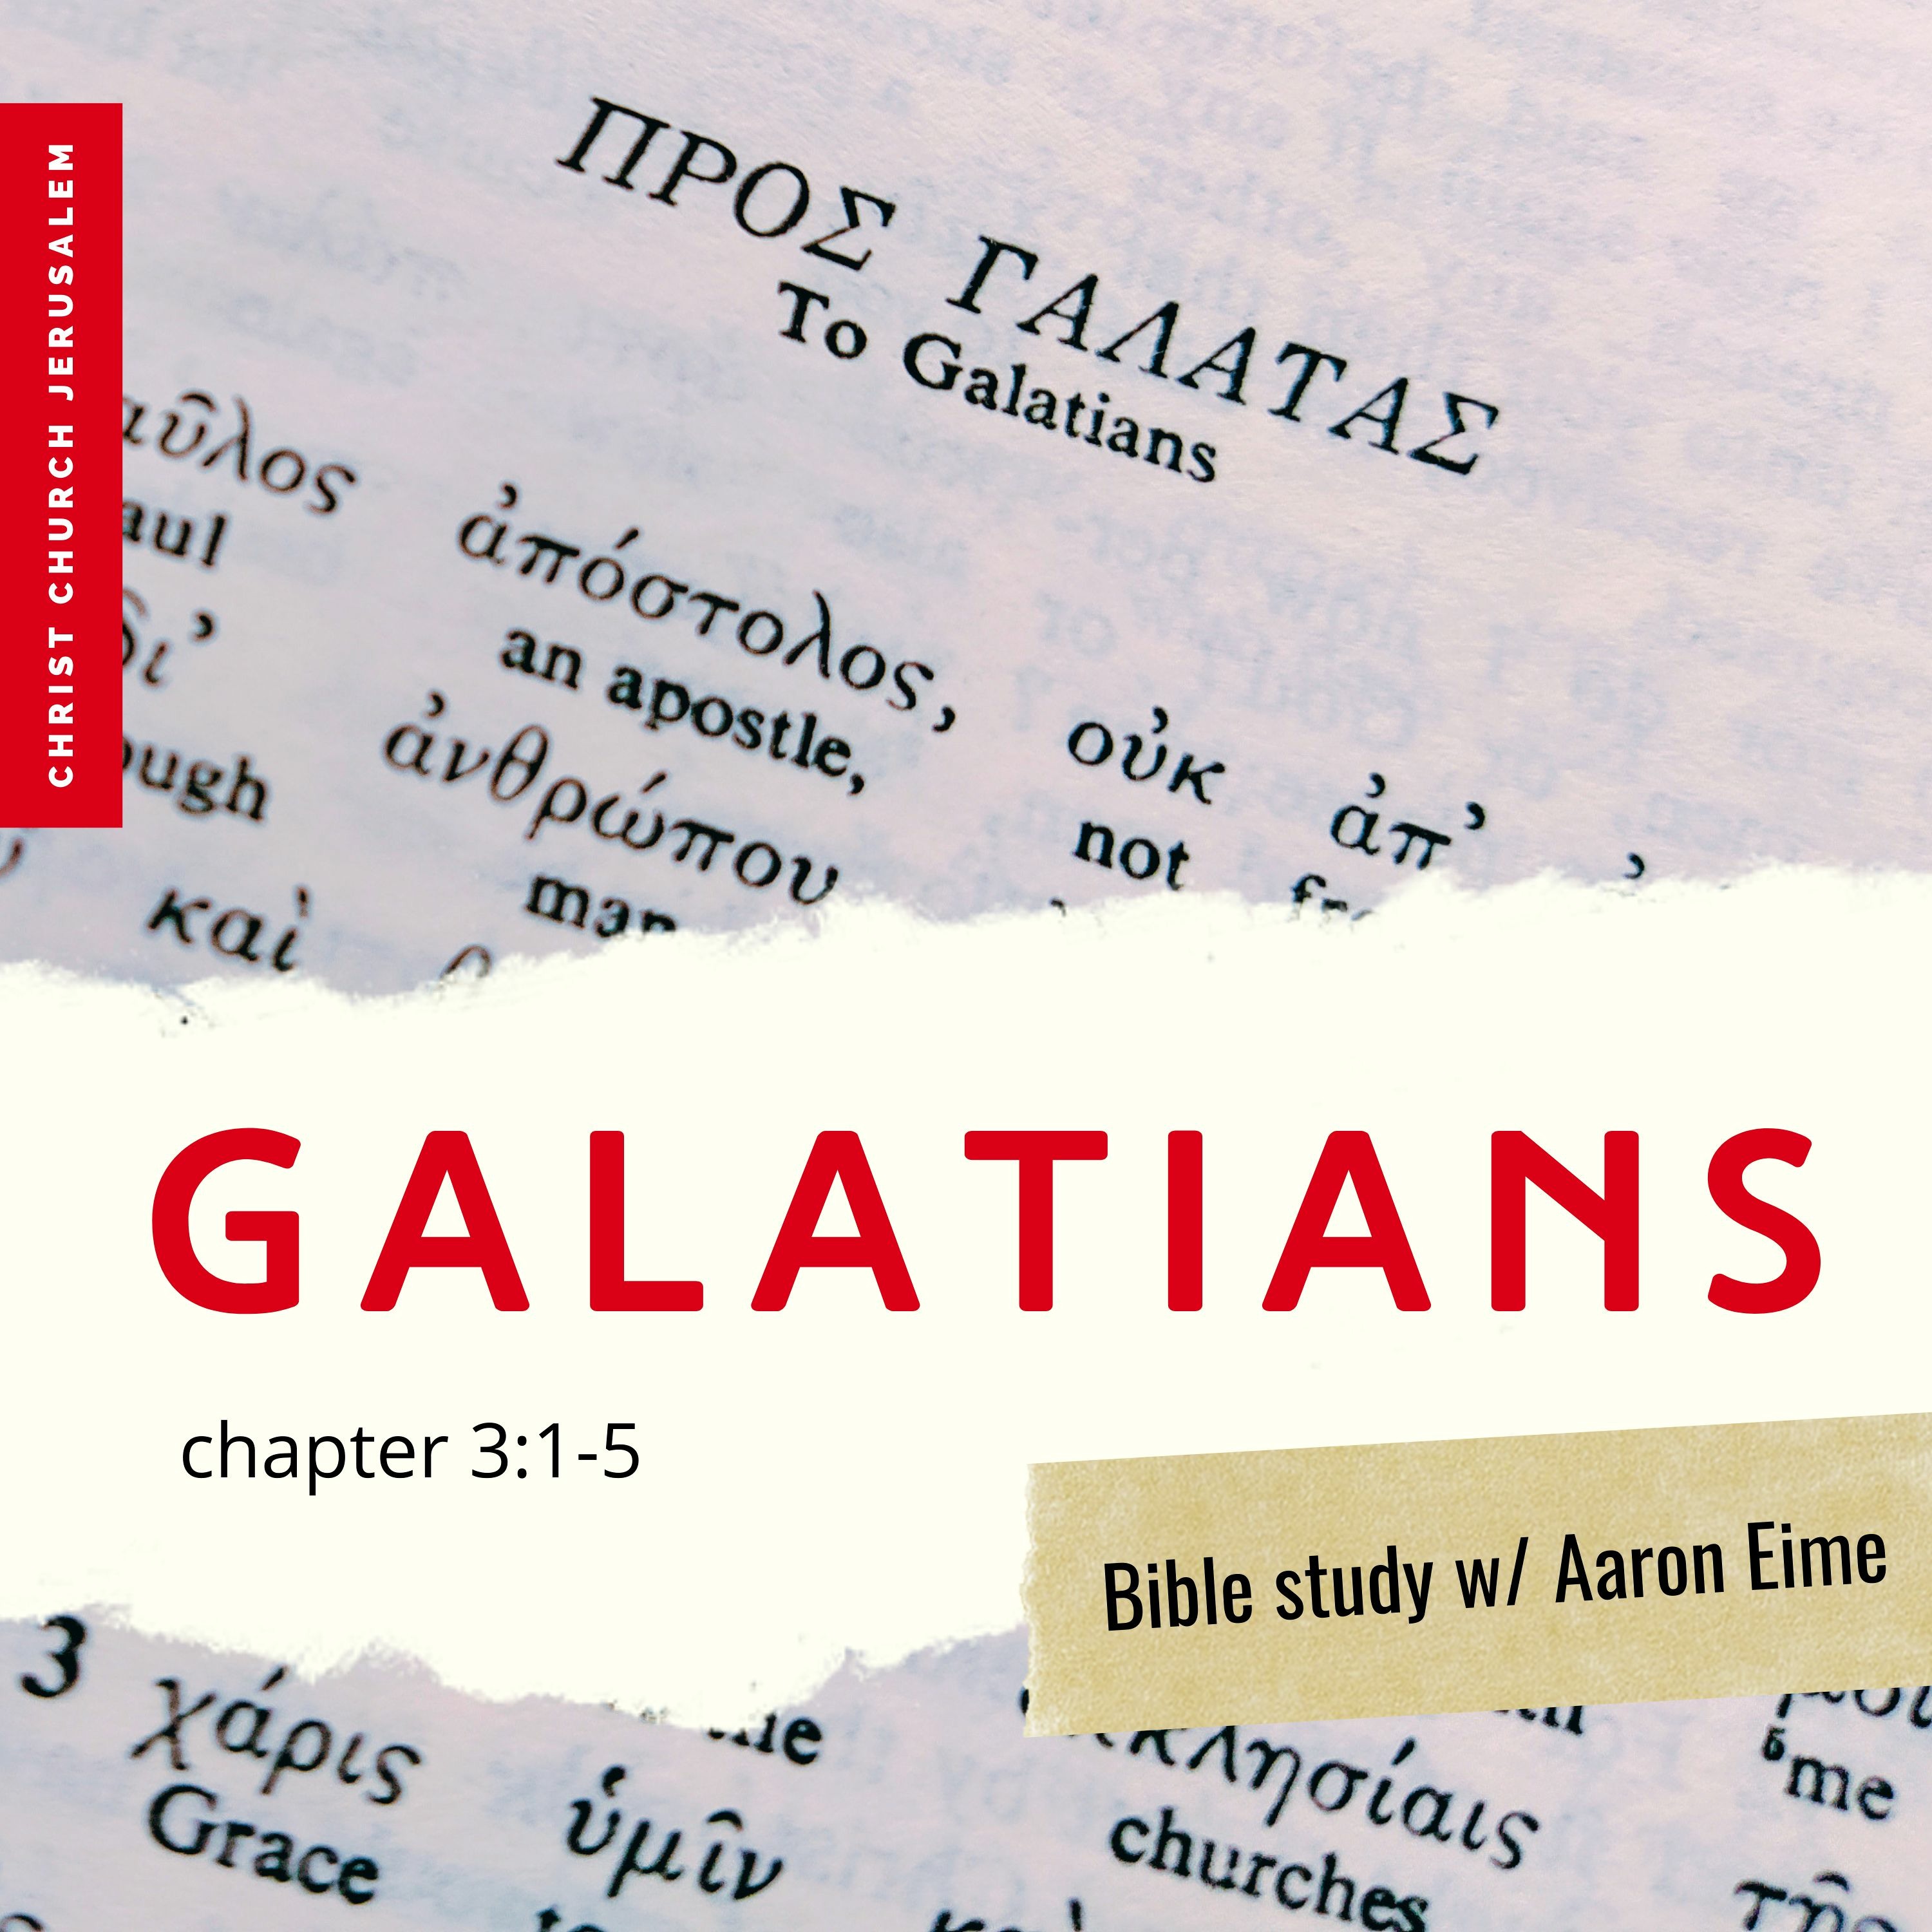 Galatians 3:1-5 - Bible study